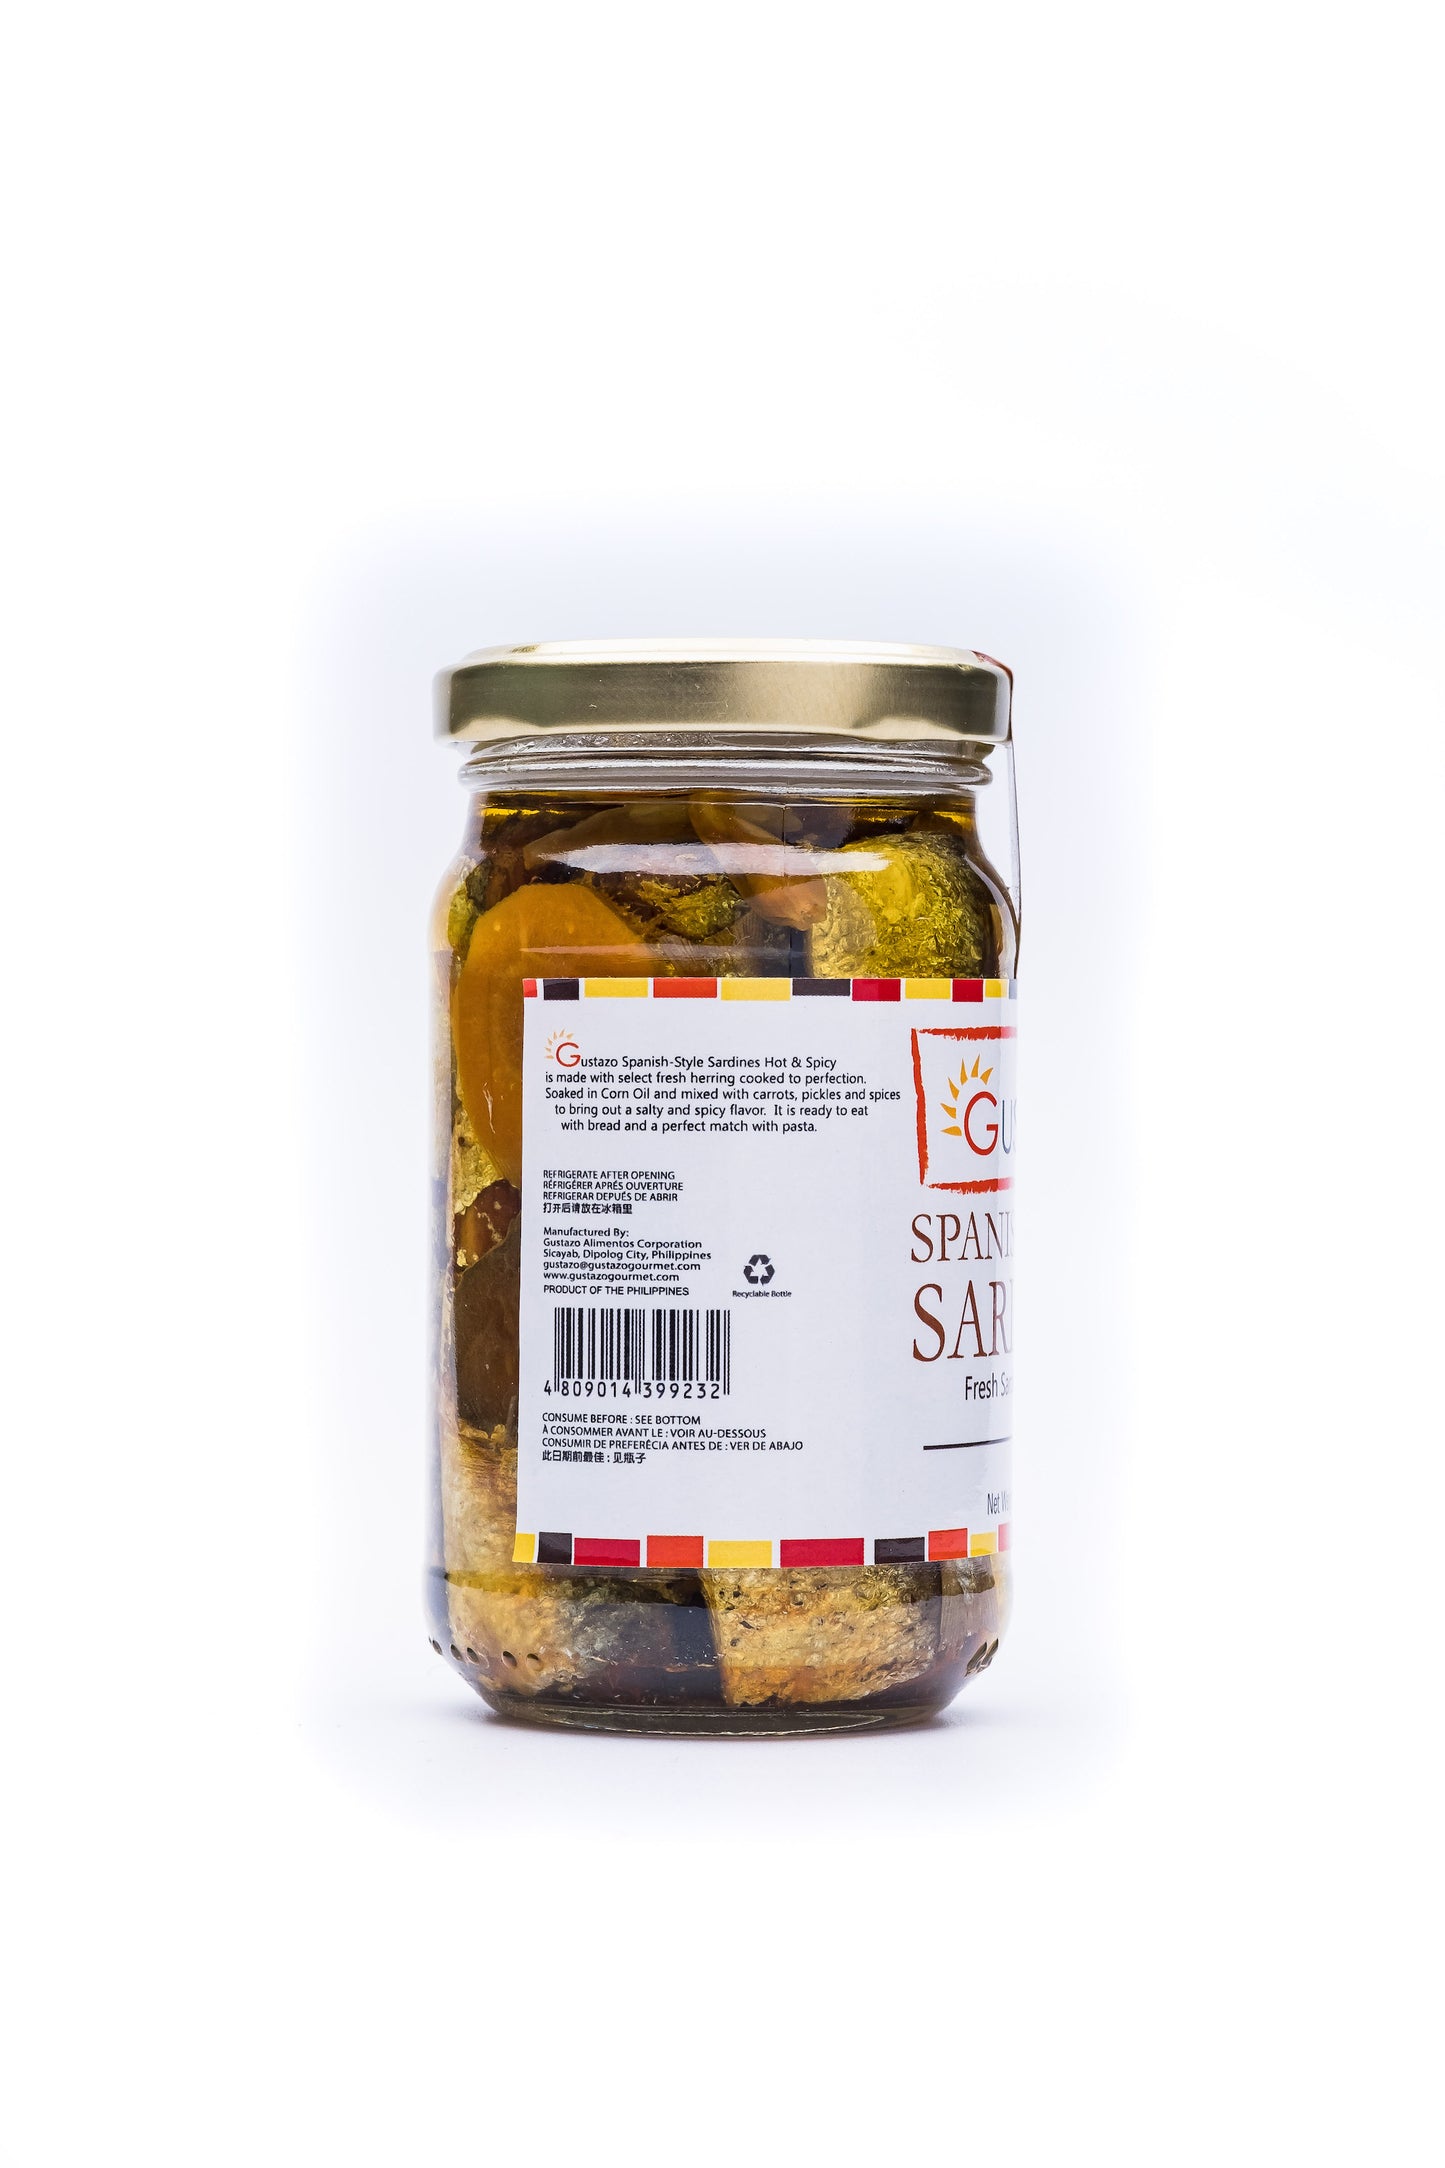 Spanish Style Sardines in Corn Oil - Spicy